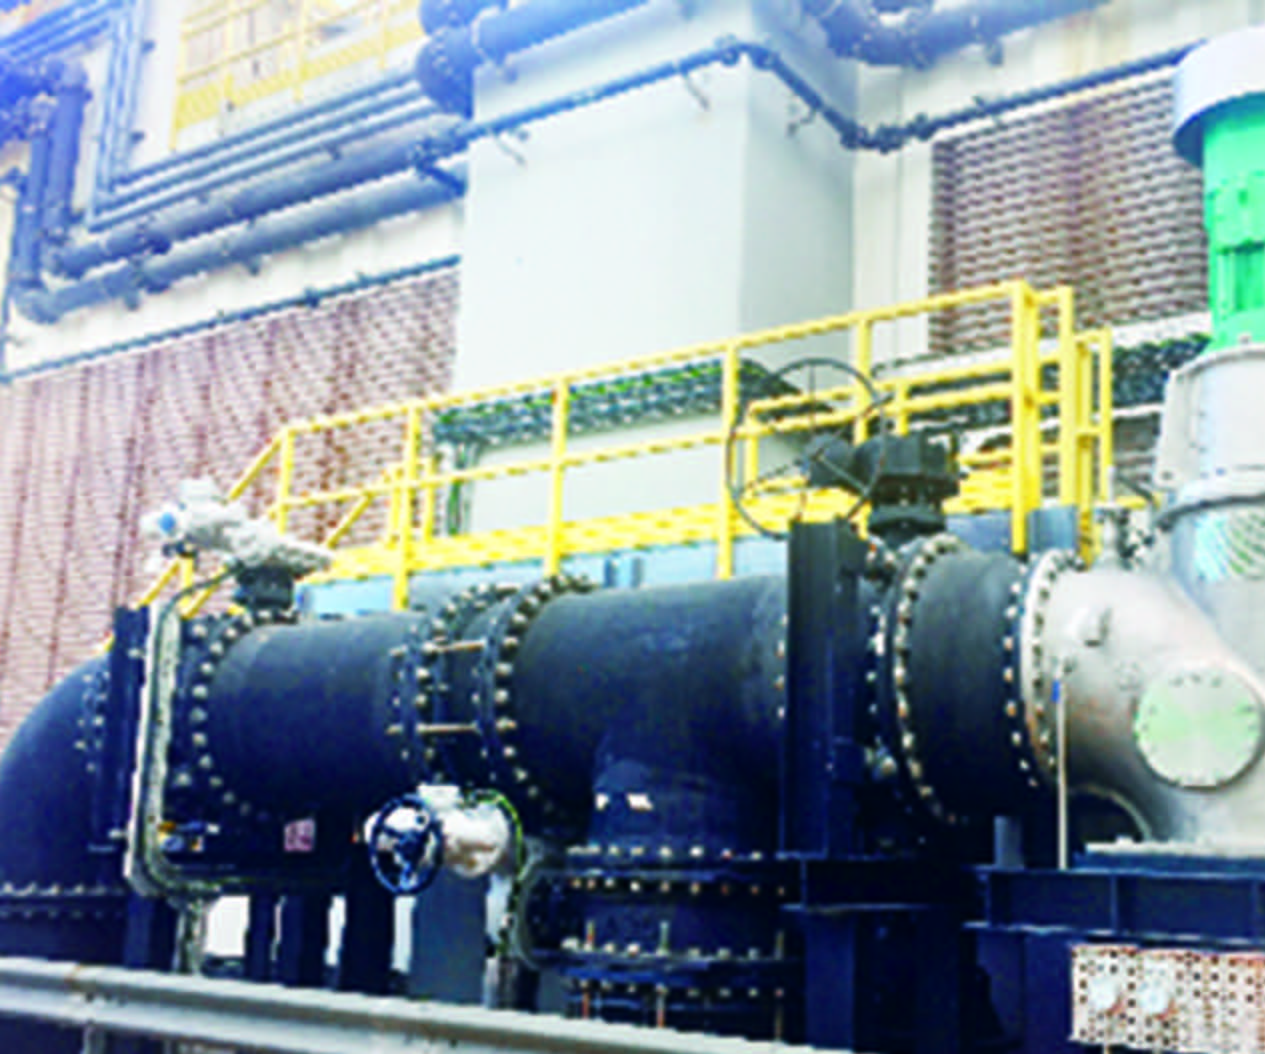 Hydro-turbine system at SCISTW